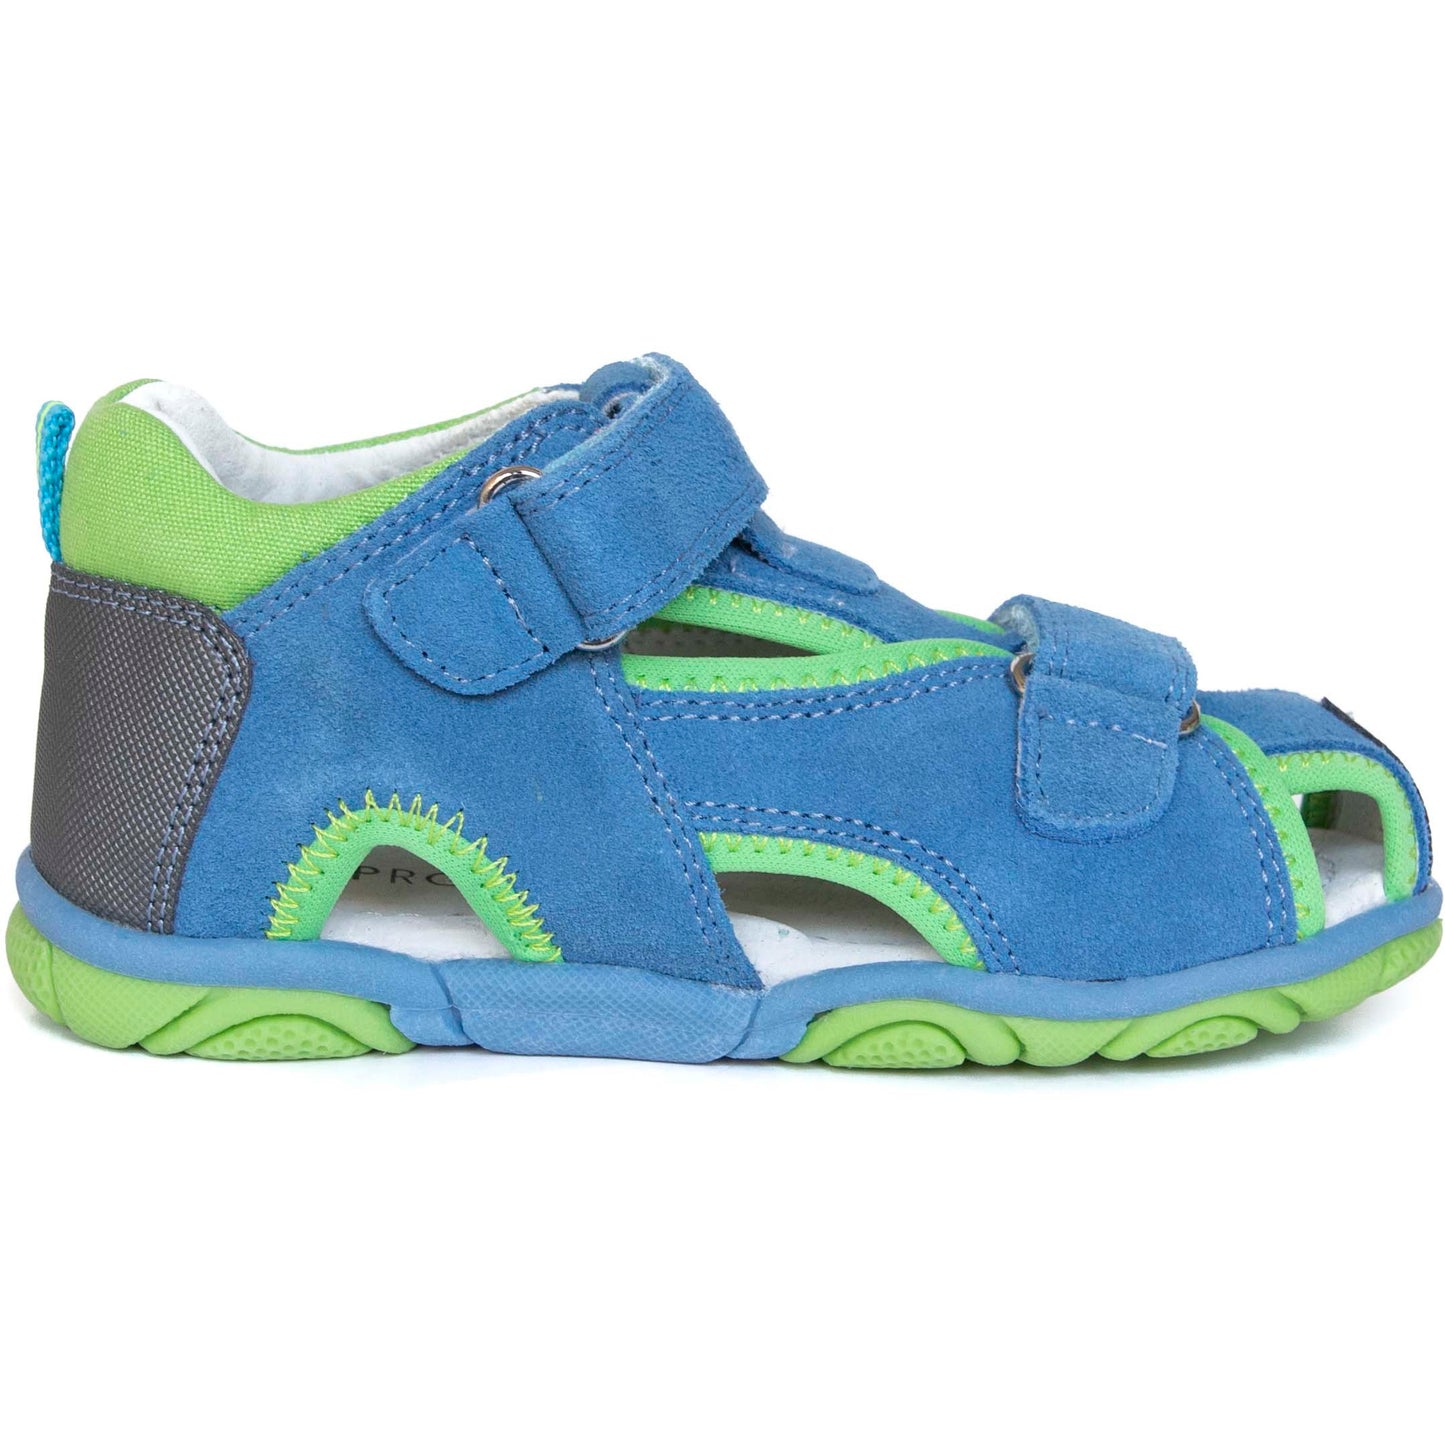 STOLER blue toddler boy arch support sandals